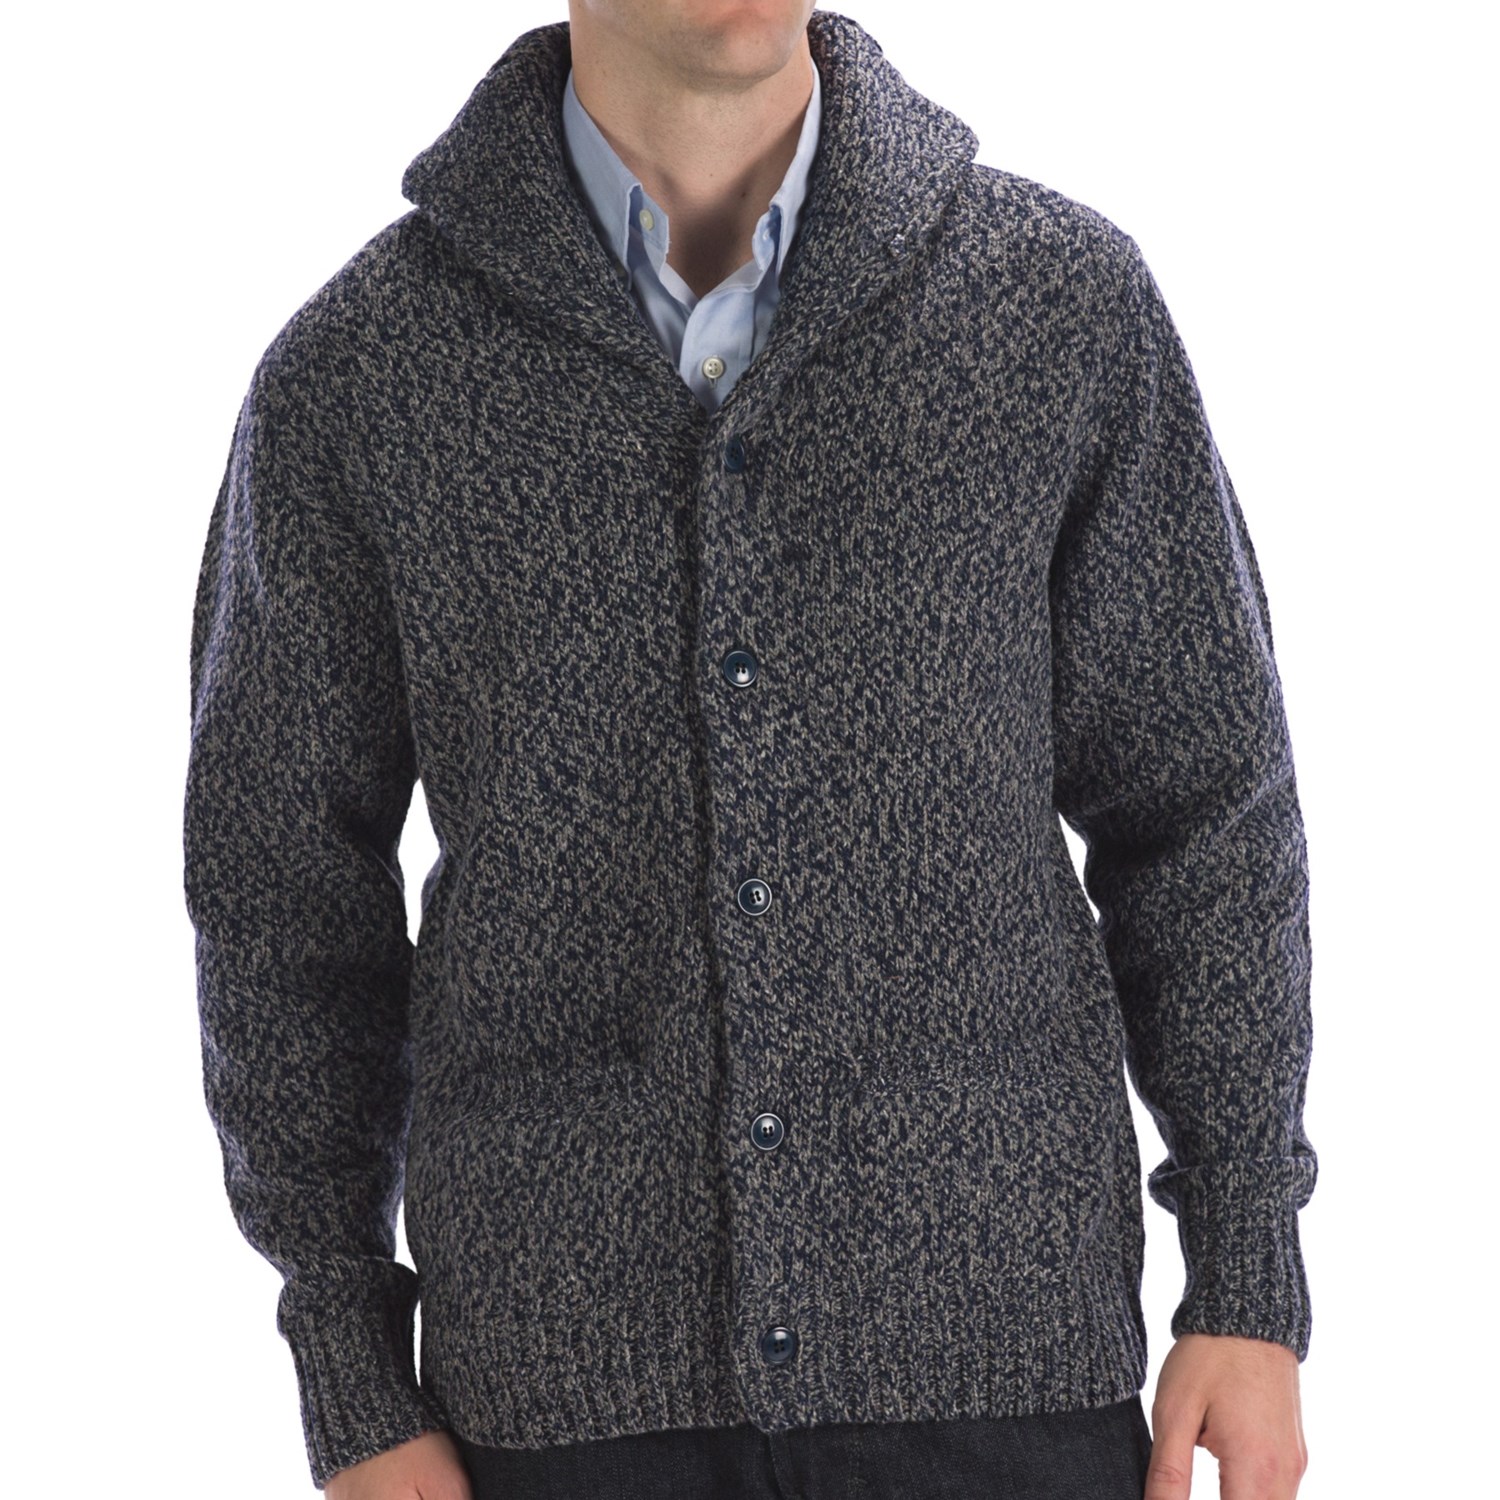 Boston Traders Marled Wool Cardigan Sweater (For Men) 5192K - Save 53%